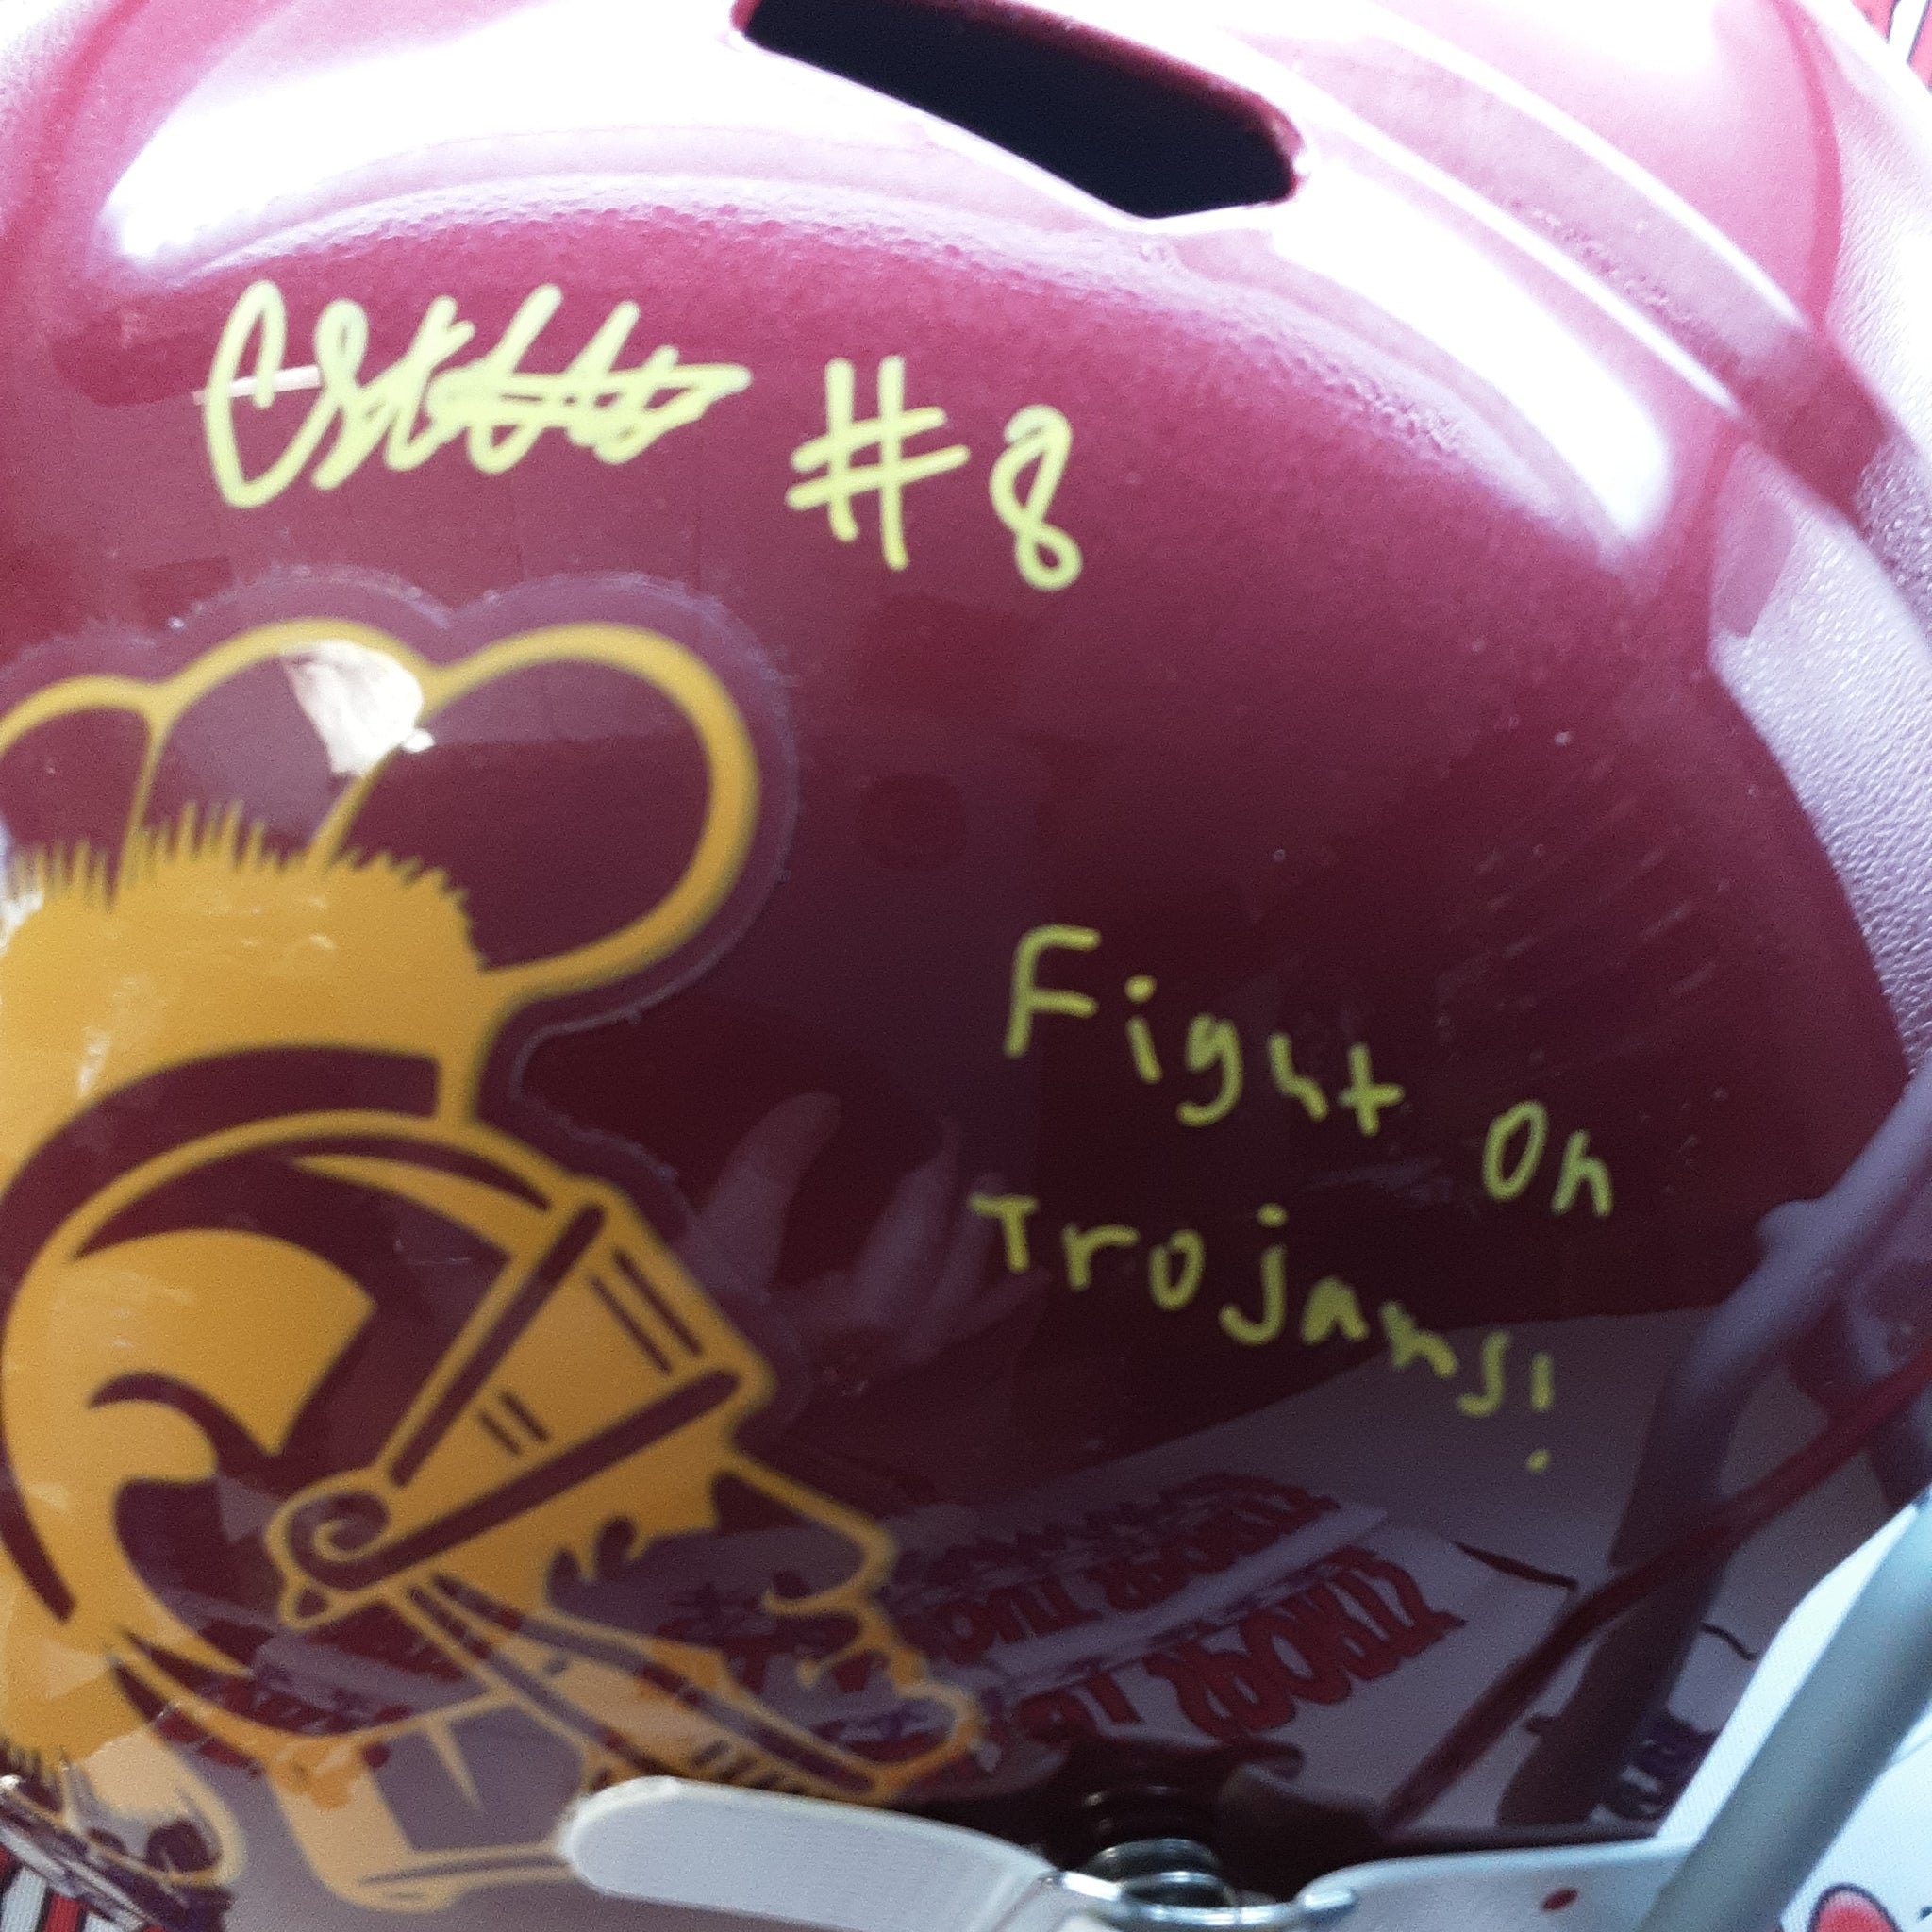 Chris Steele Authentic Signed with Inscription Autographed Full-size Helmet JSA.